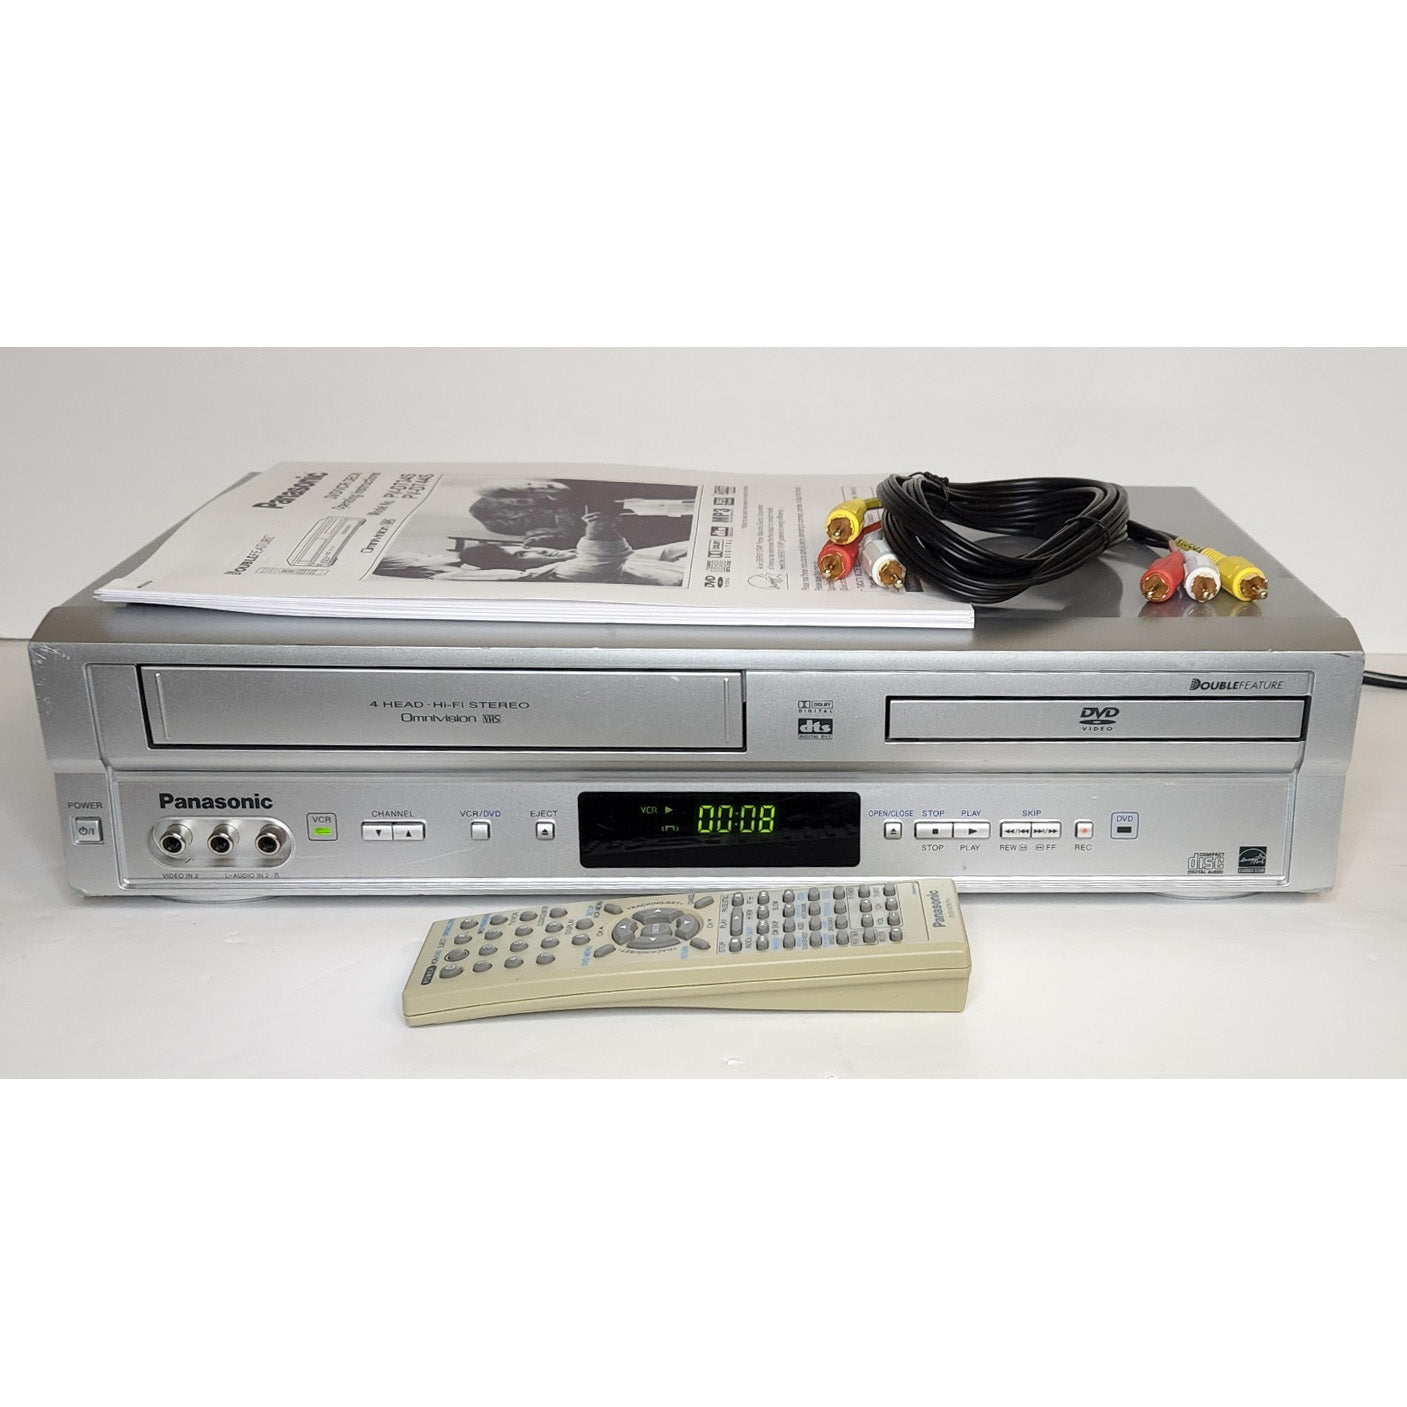 Panasonic PV-D744S Omnivision VCR/DVD Player Combo